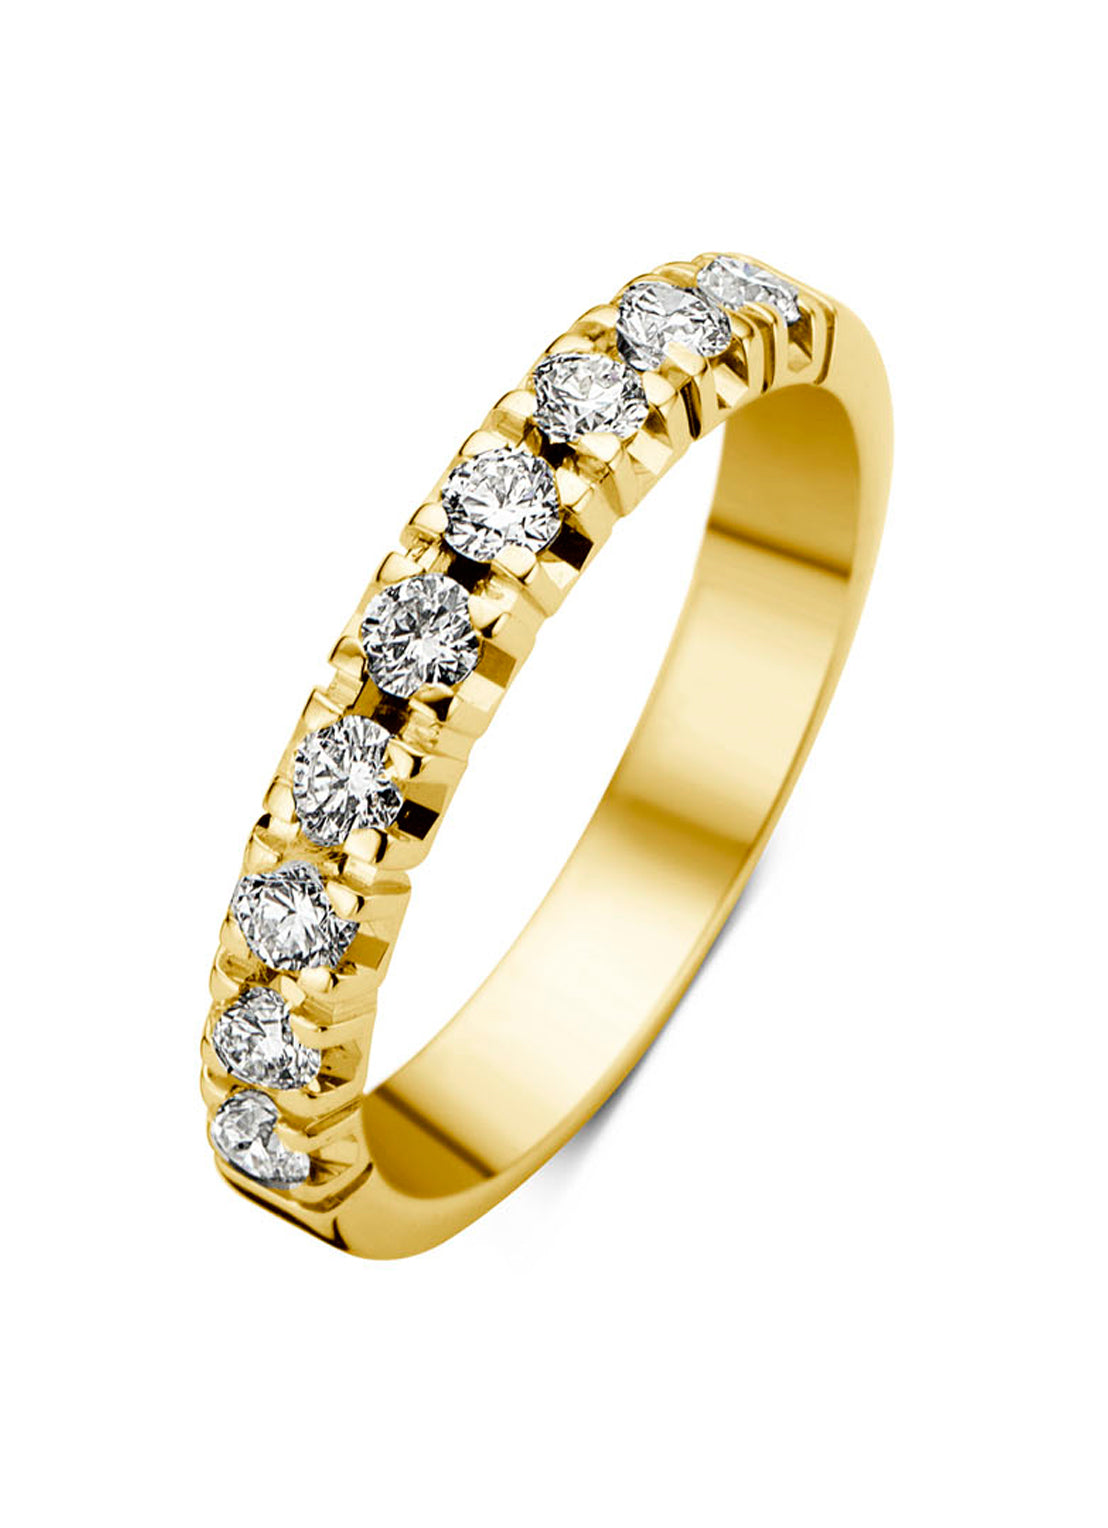 Geelgouden alliance ring, 0.45 ct diamant, Groeibriljant